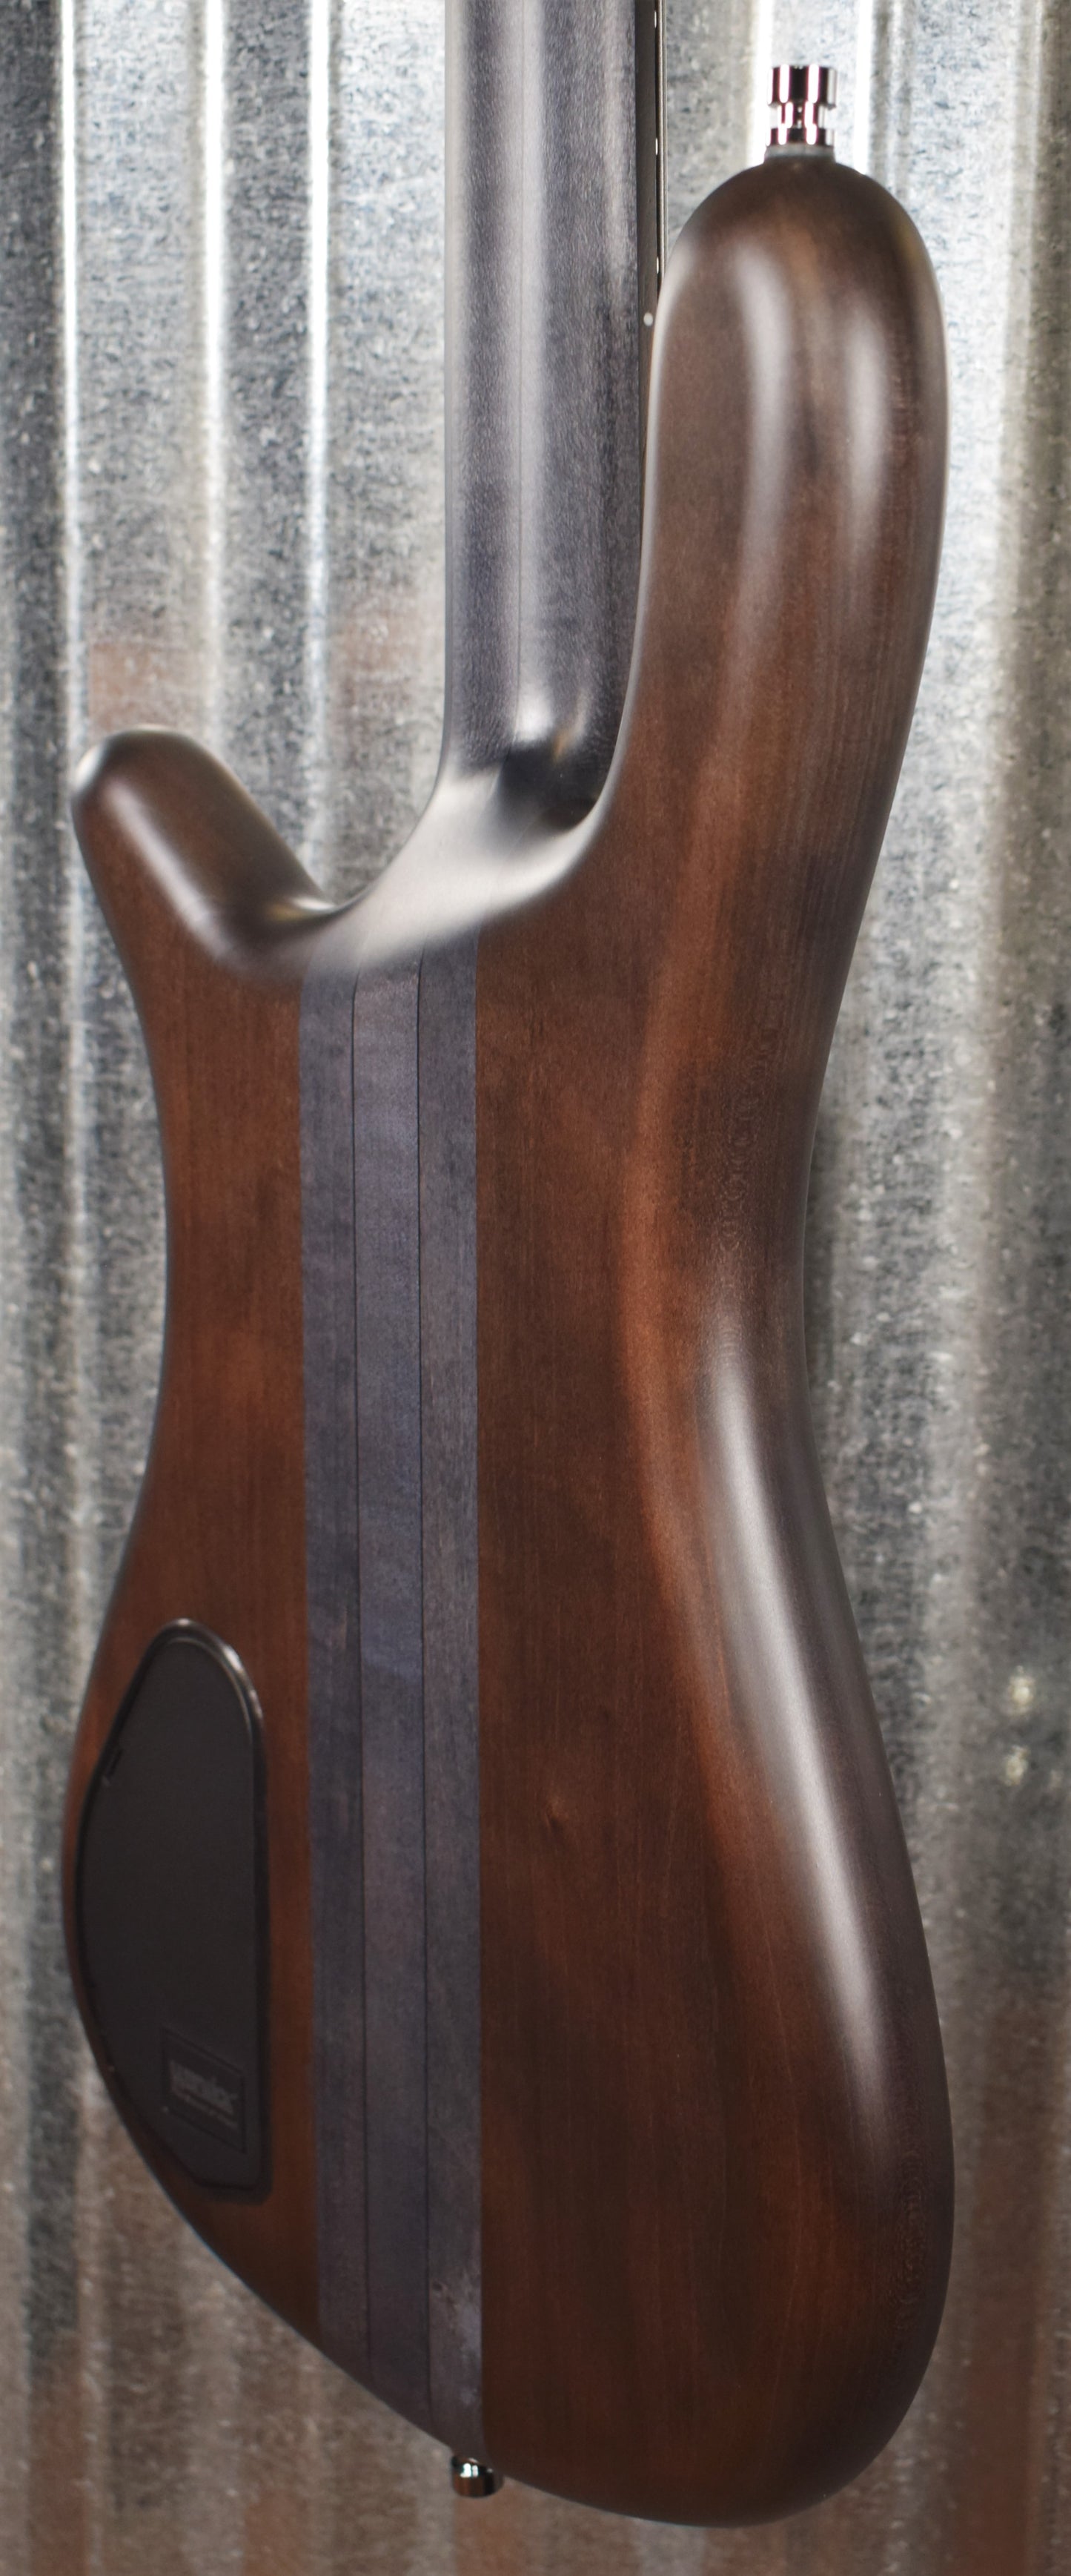 Warwick German Pro Series Streamer Stage I 4 String Nirvana Black Bass & Bag #2119